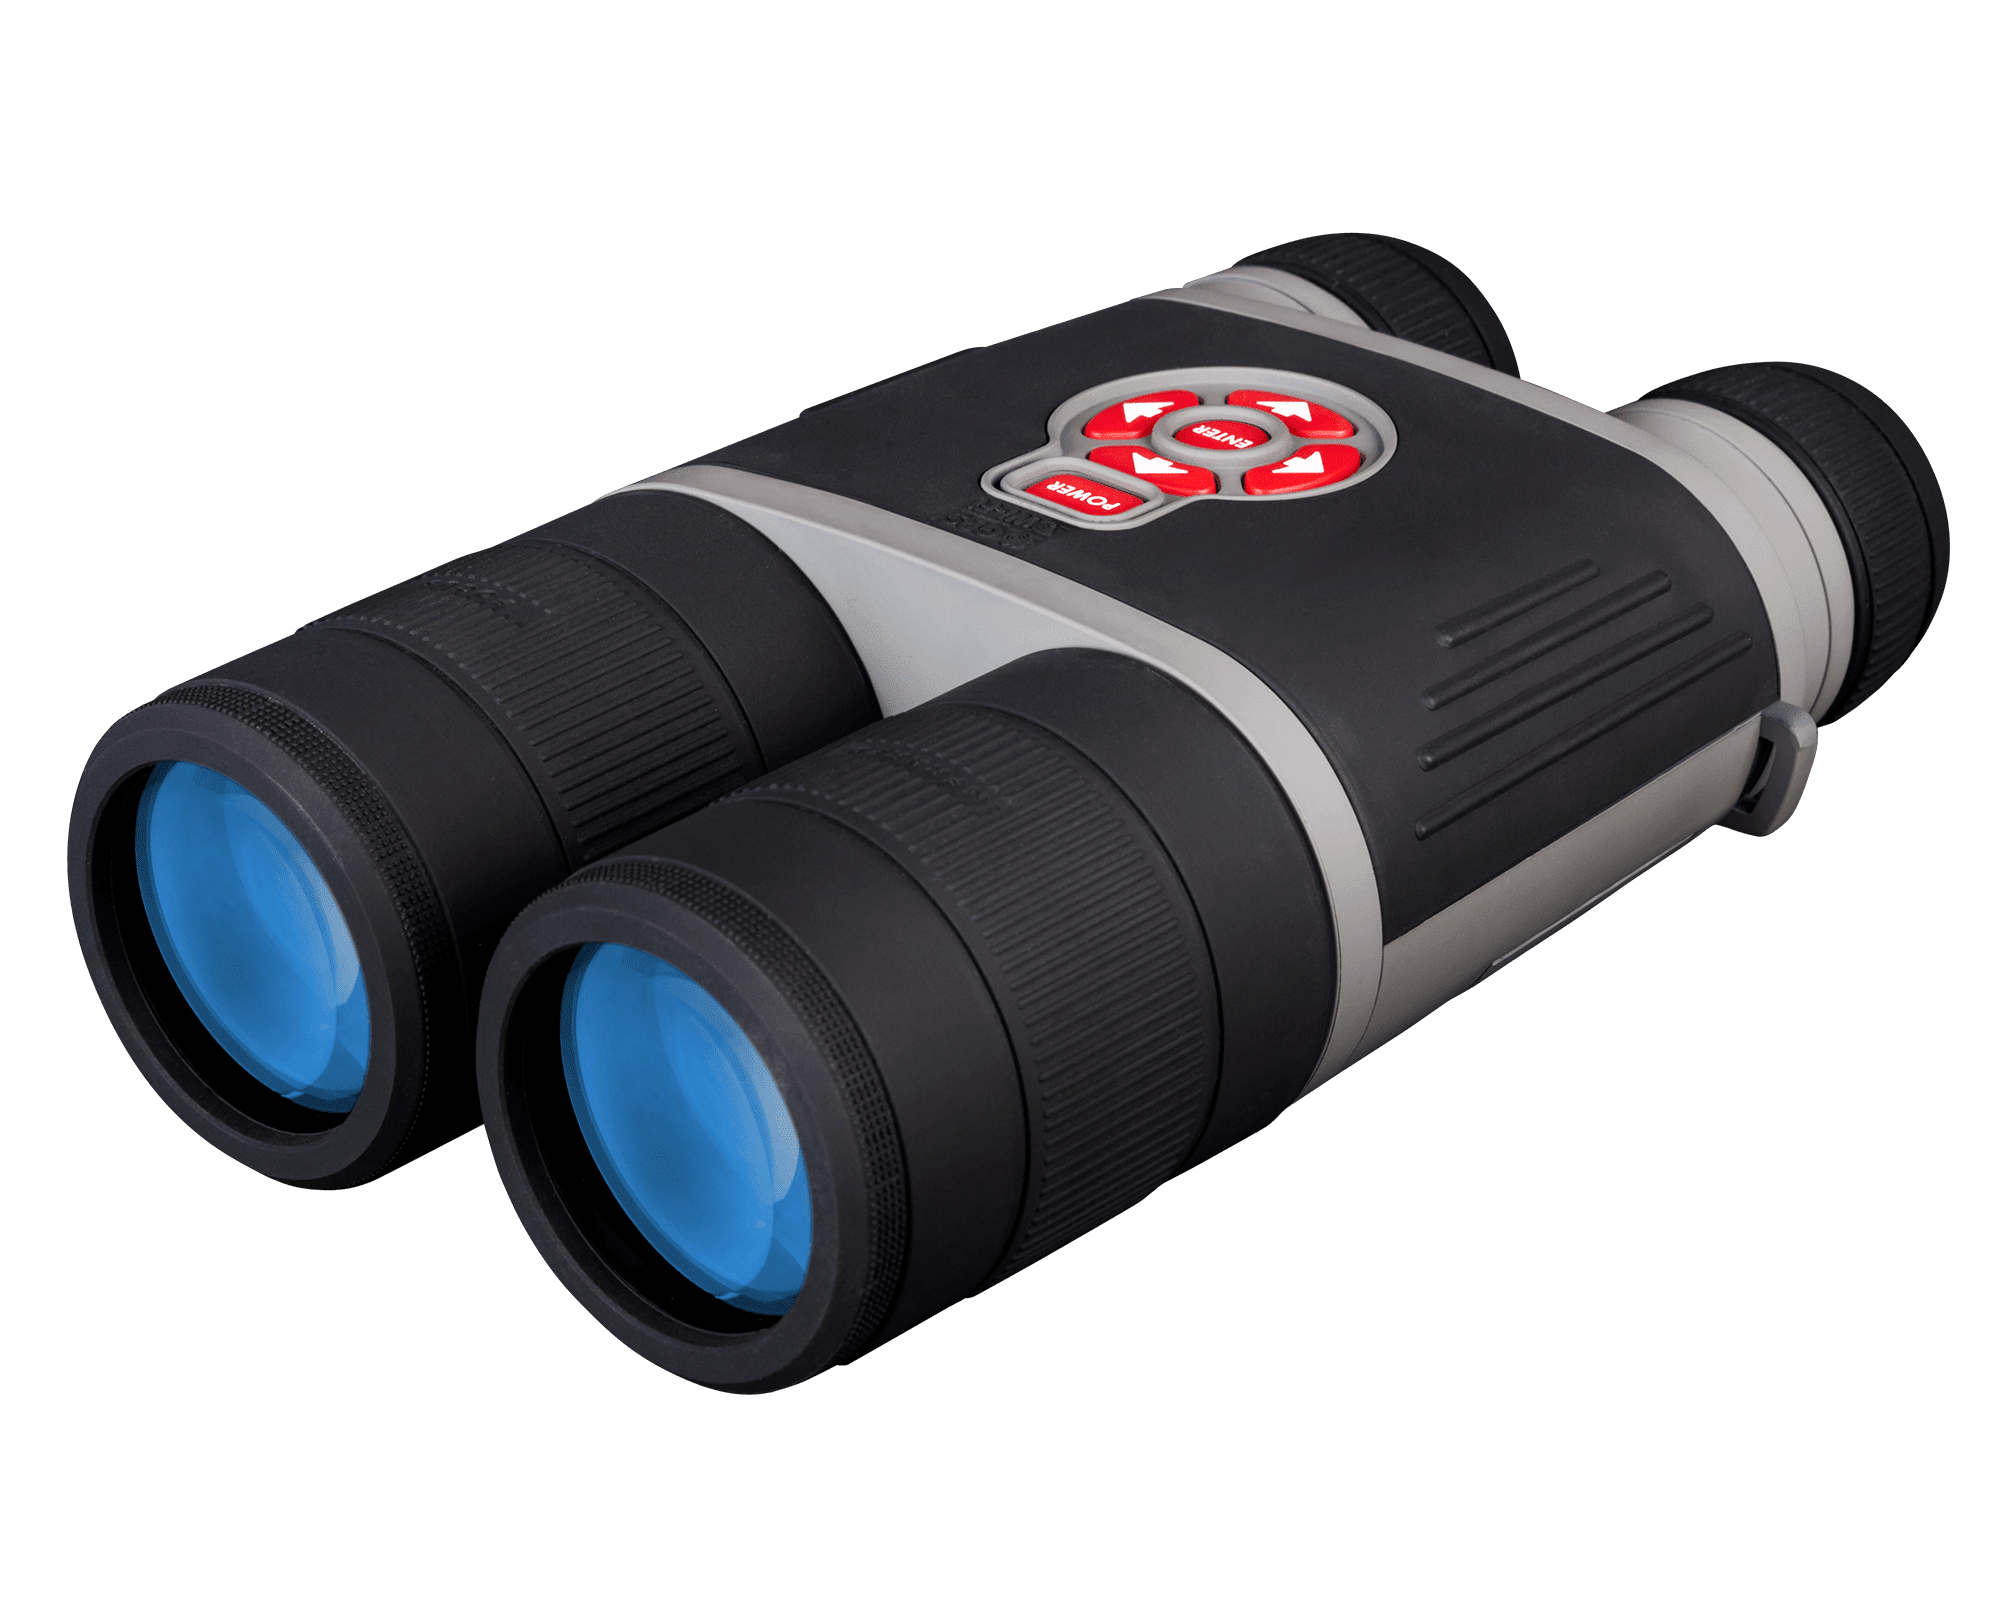 digital binoculars with camera and nv